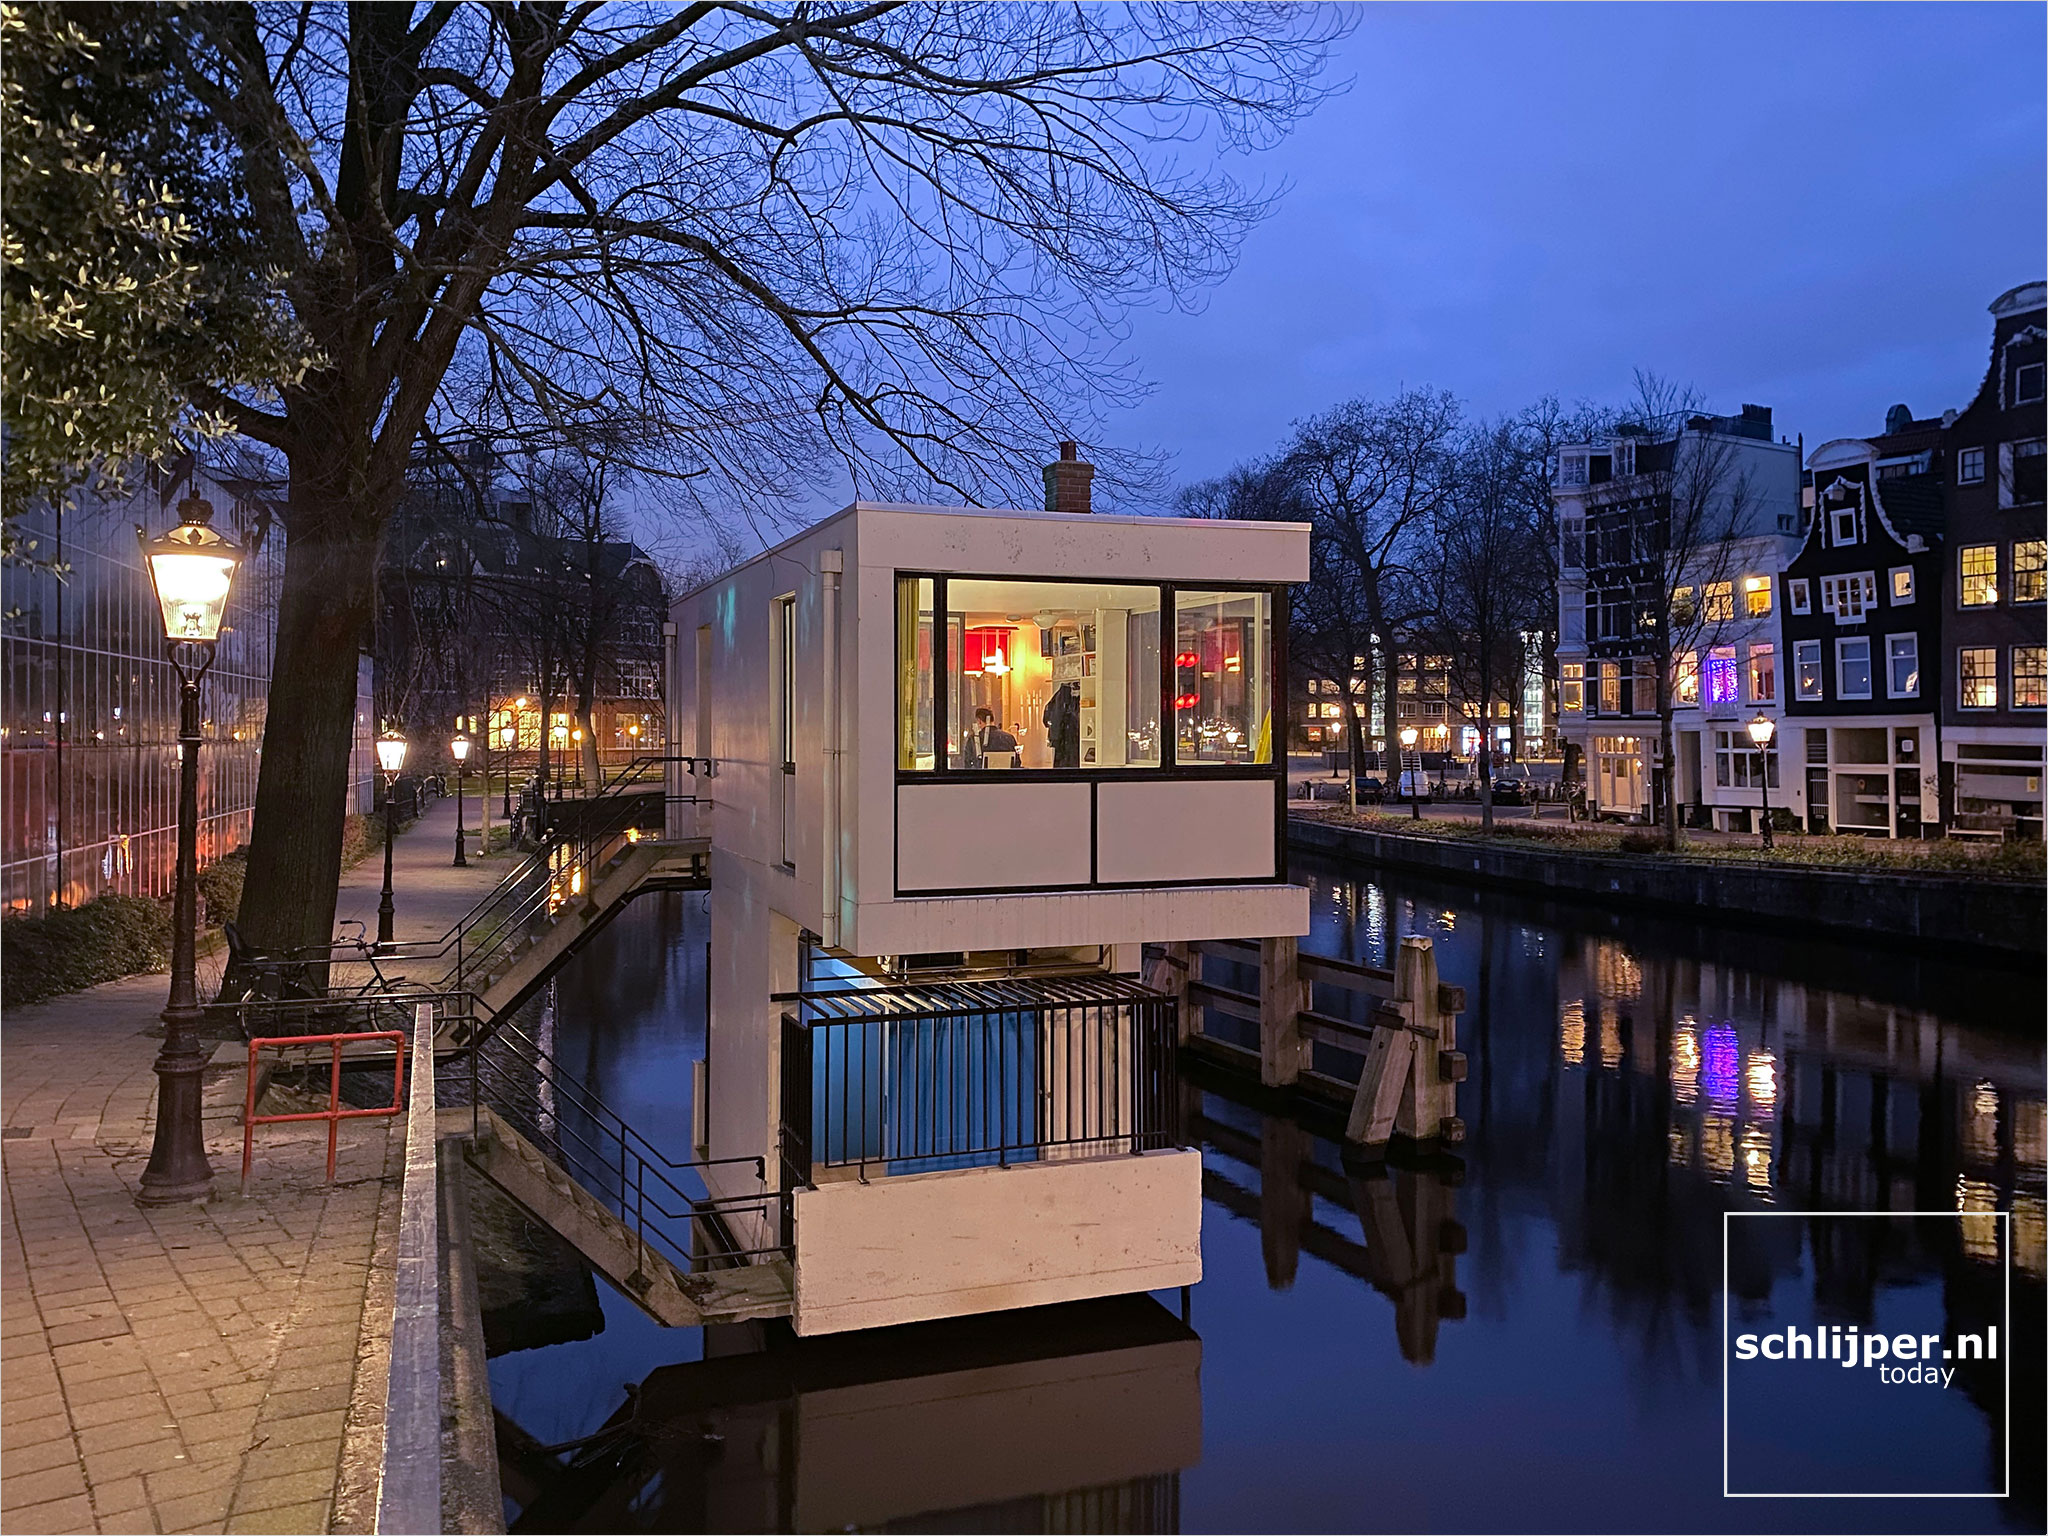 The Netherlands, Amsterdam, 6 januari 2021